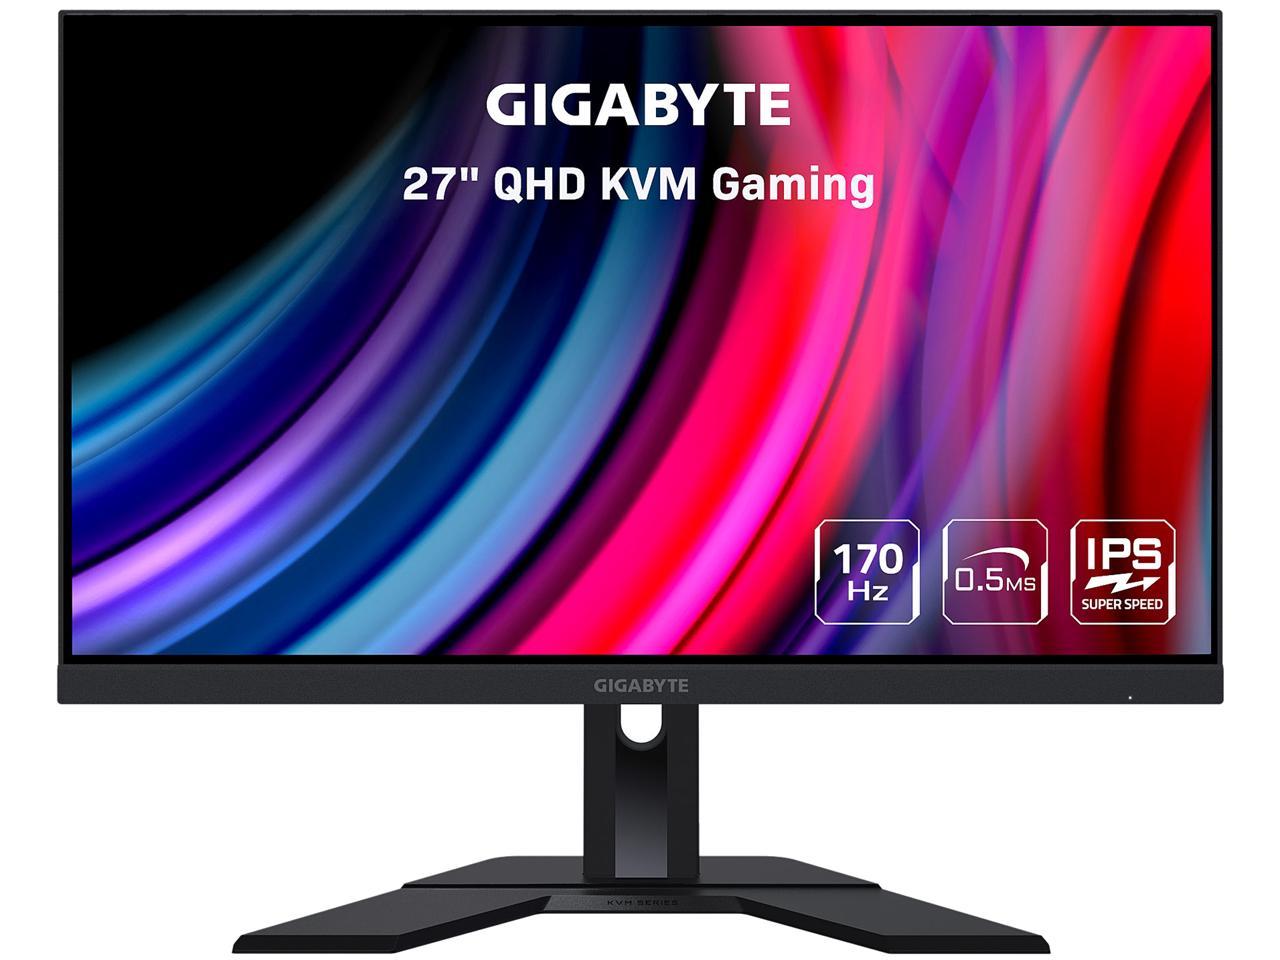 GIGABYTE M27Q 27" 170Hz 1440P KVM Gaming Monitor, 2560 x 1440 SS IPS, 0.5ms (MPRT), 92% DCI P3, HDR Ready, FreeSync Premium, 1x DisplayPort 1.2, 2x HDMI 2.0, 2x USB 3.0 $270